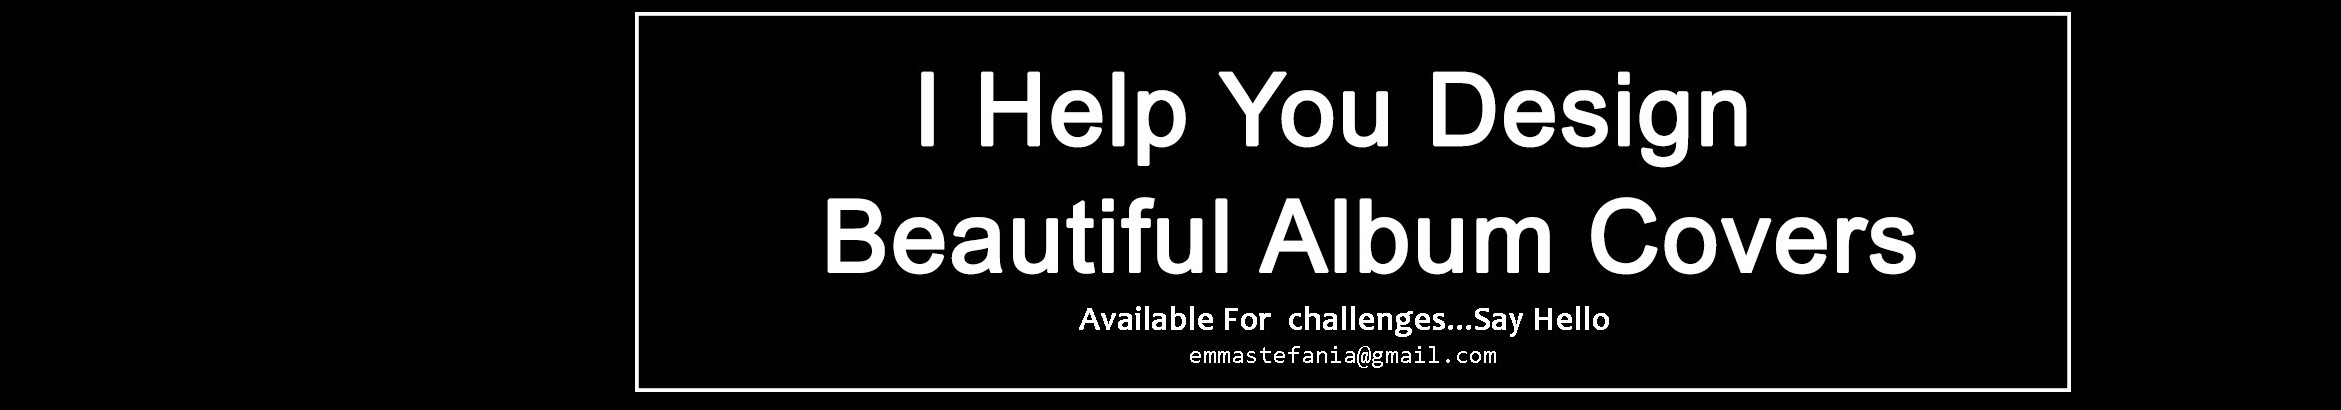 emma stefania's profile banner